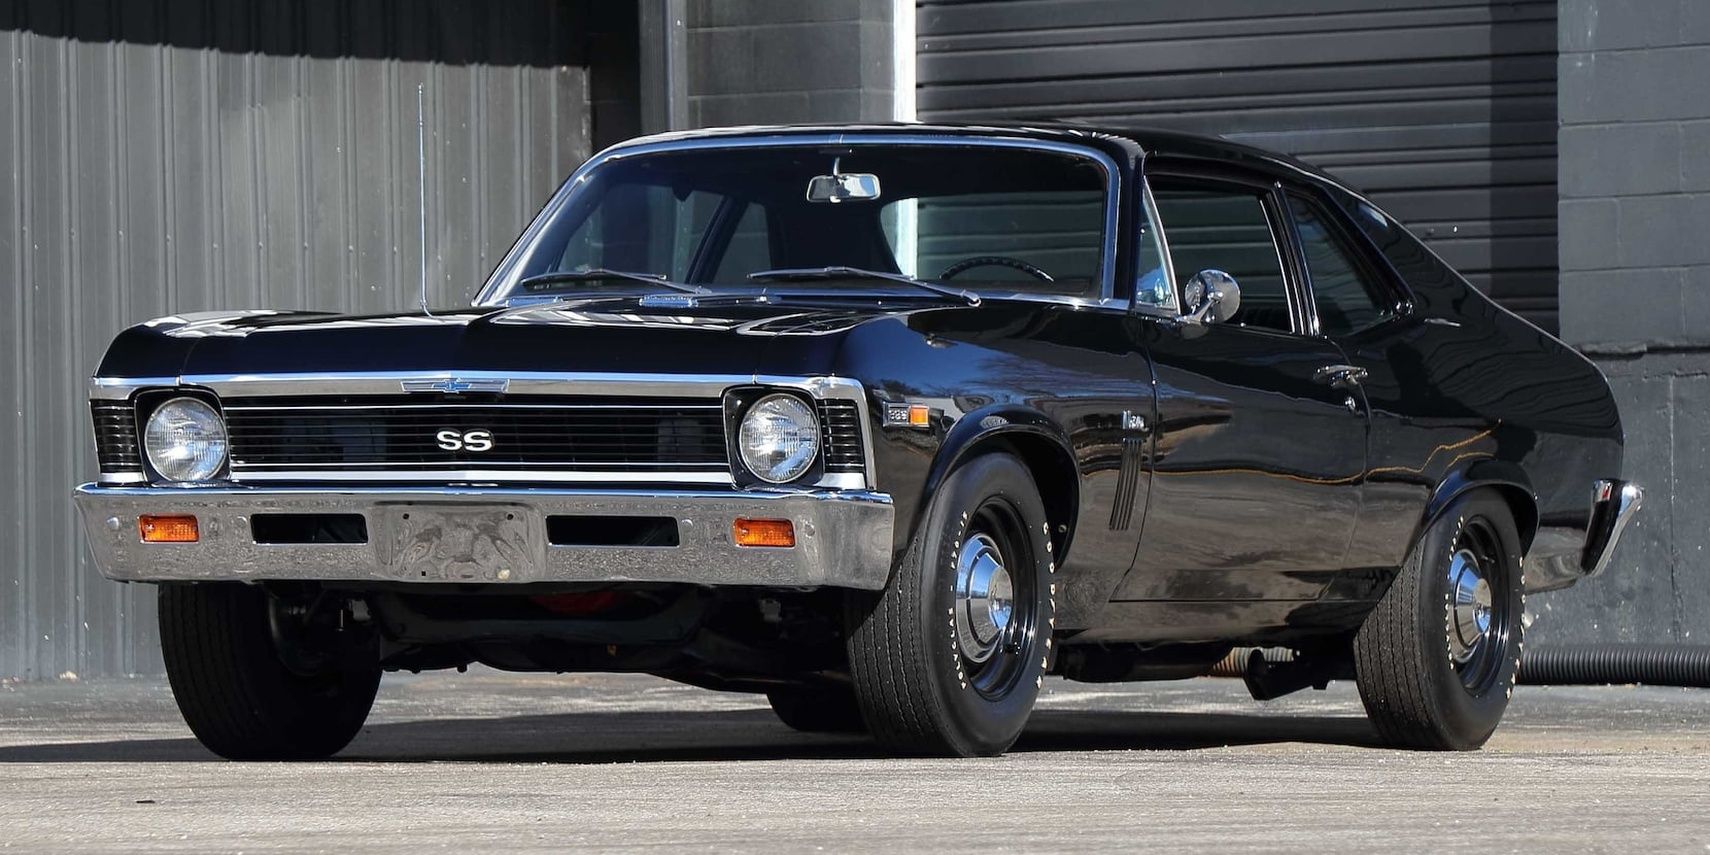 1969 Chevrolet Nova SS 396 black muscle car